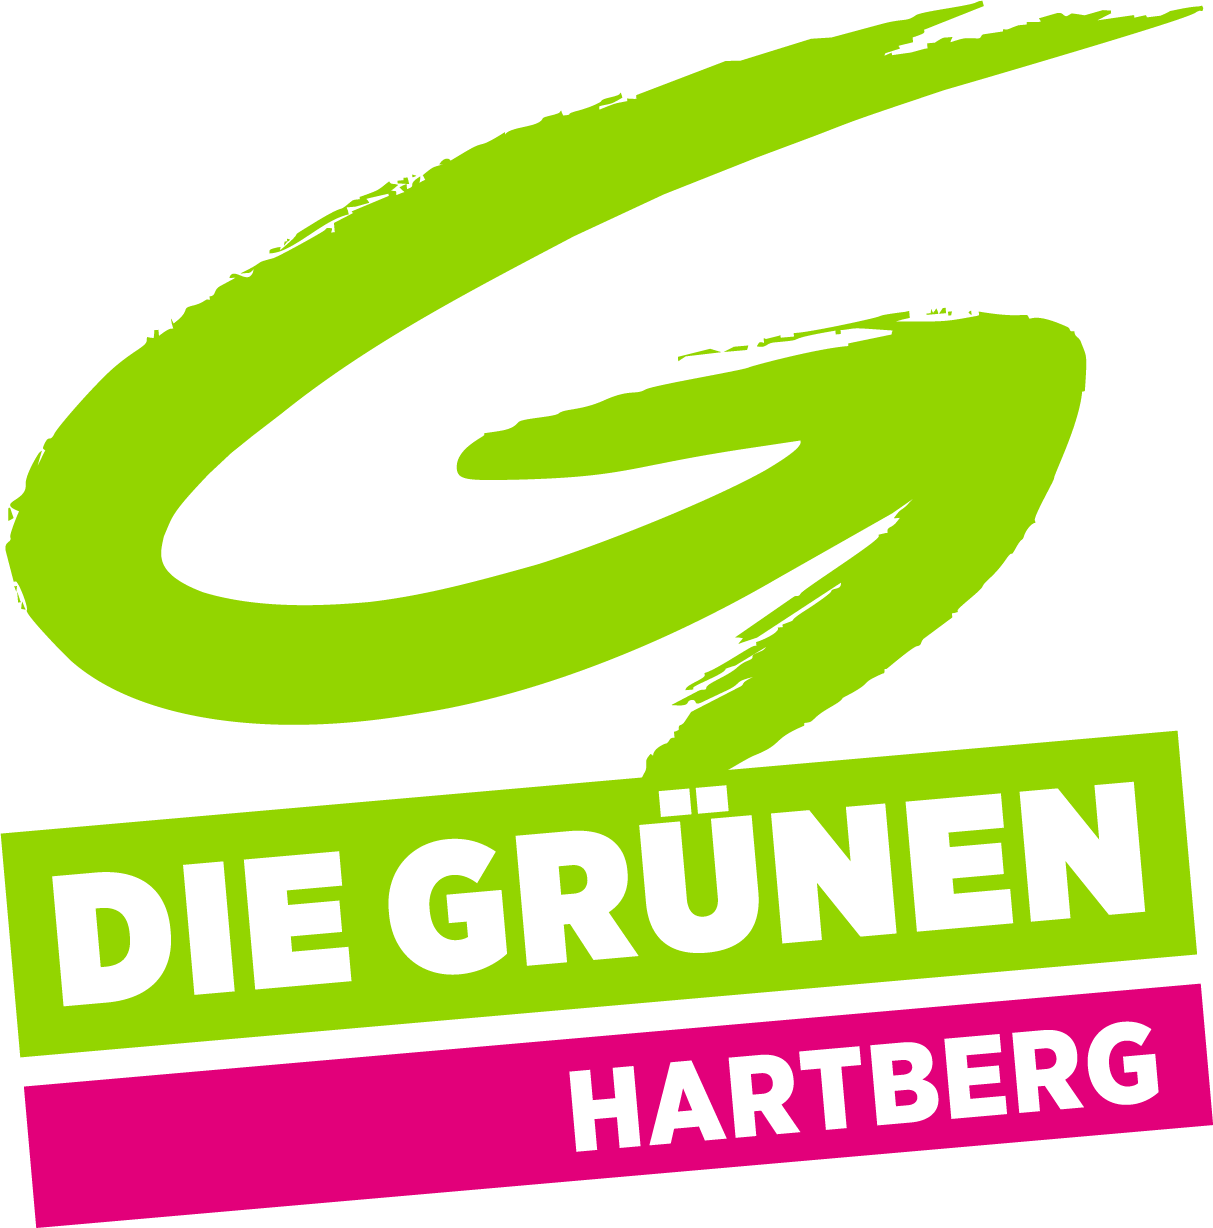 Die Grünen Hartberg